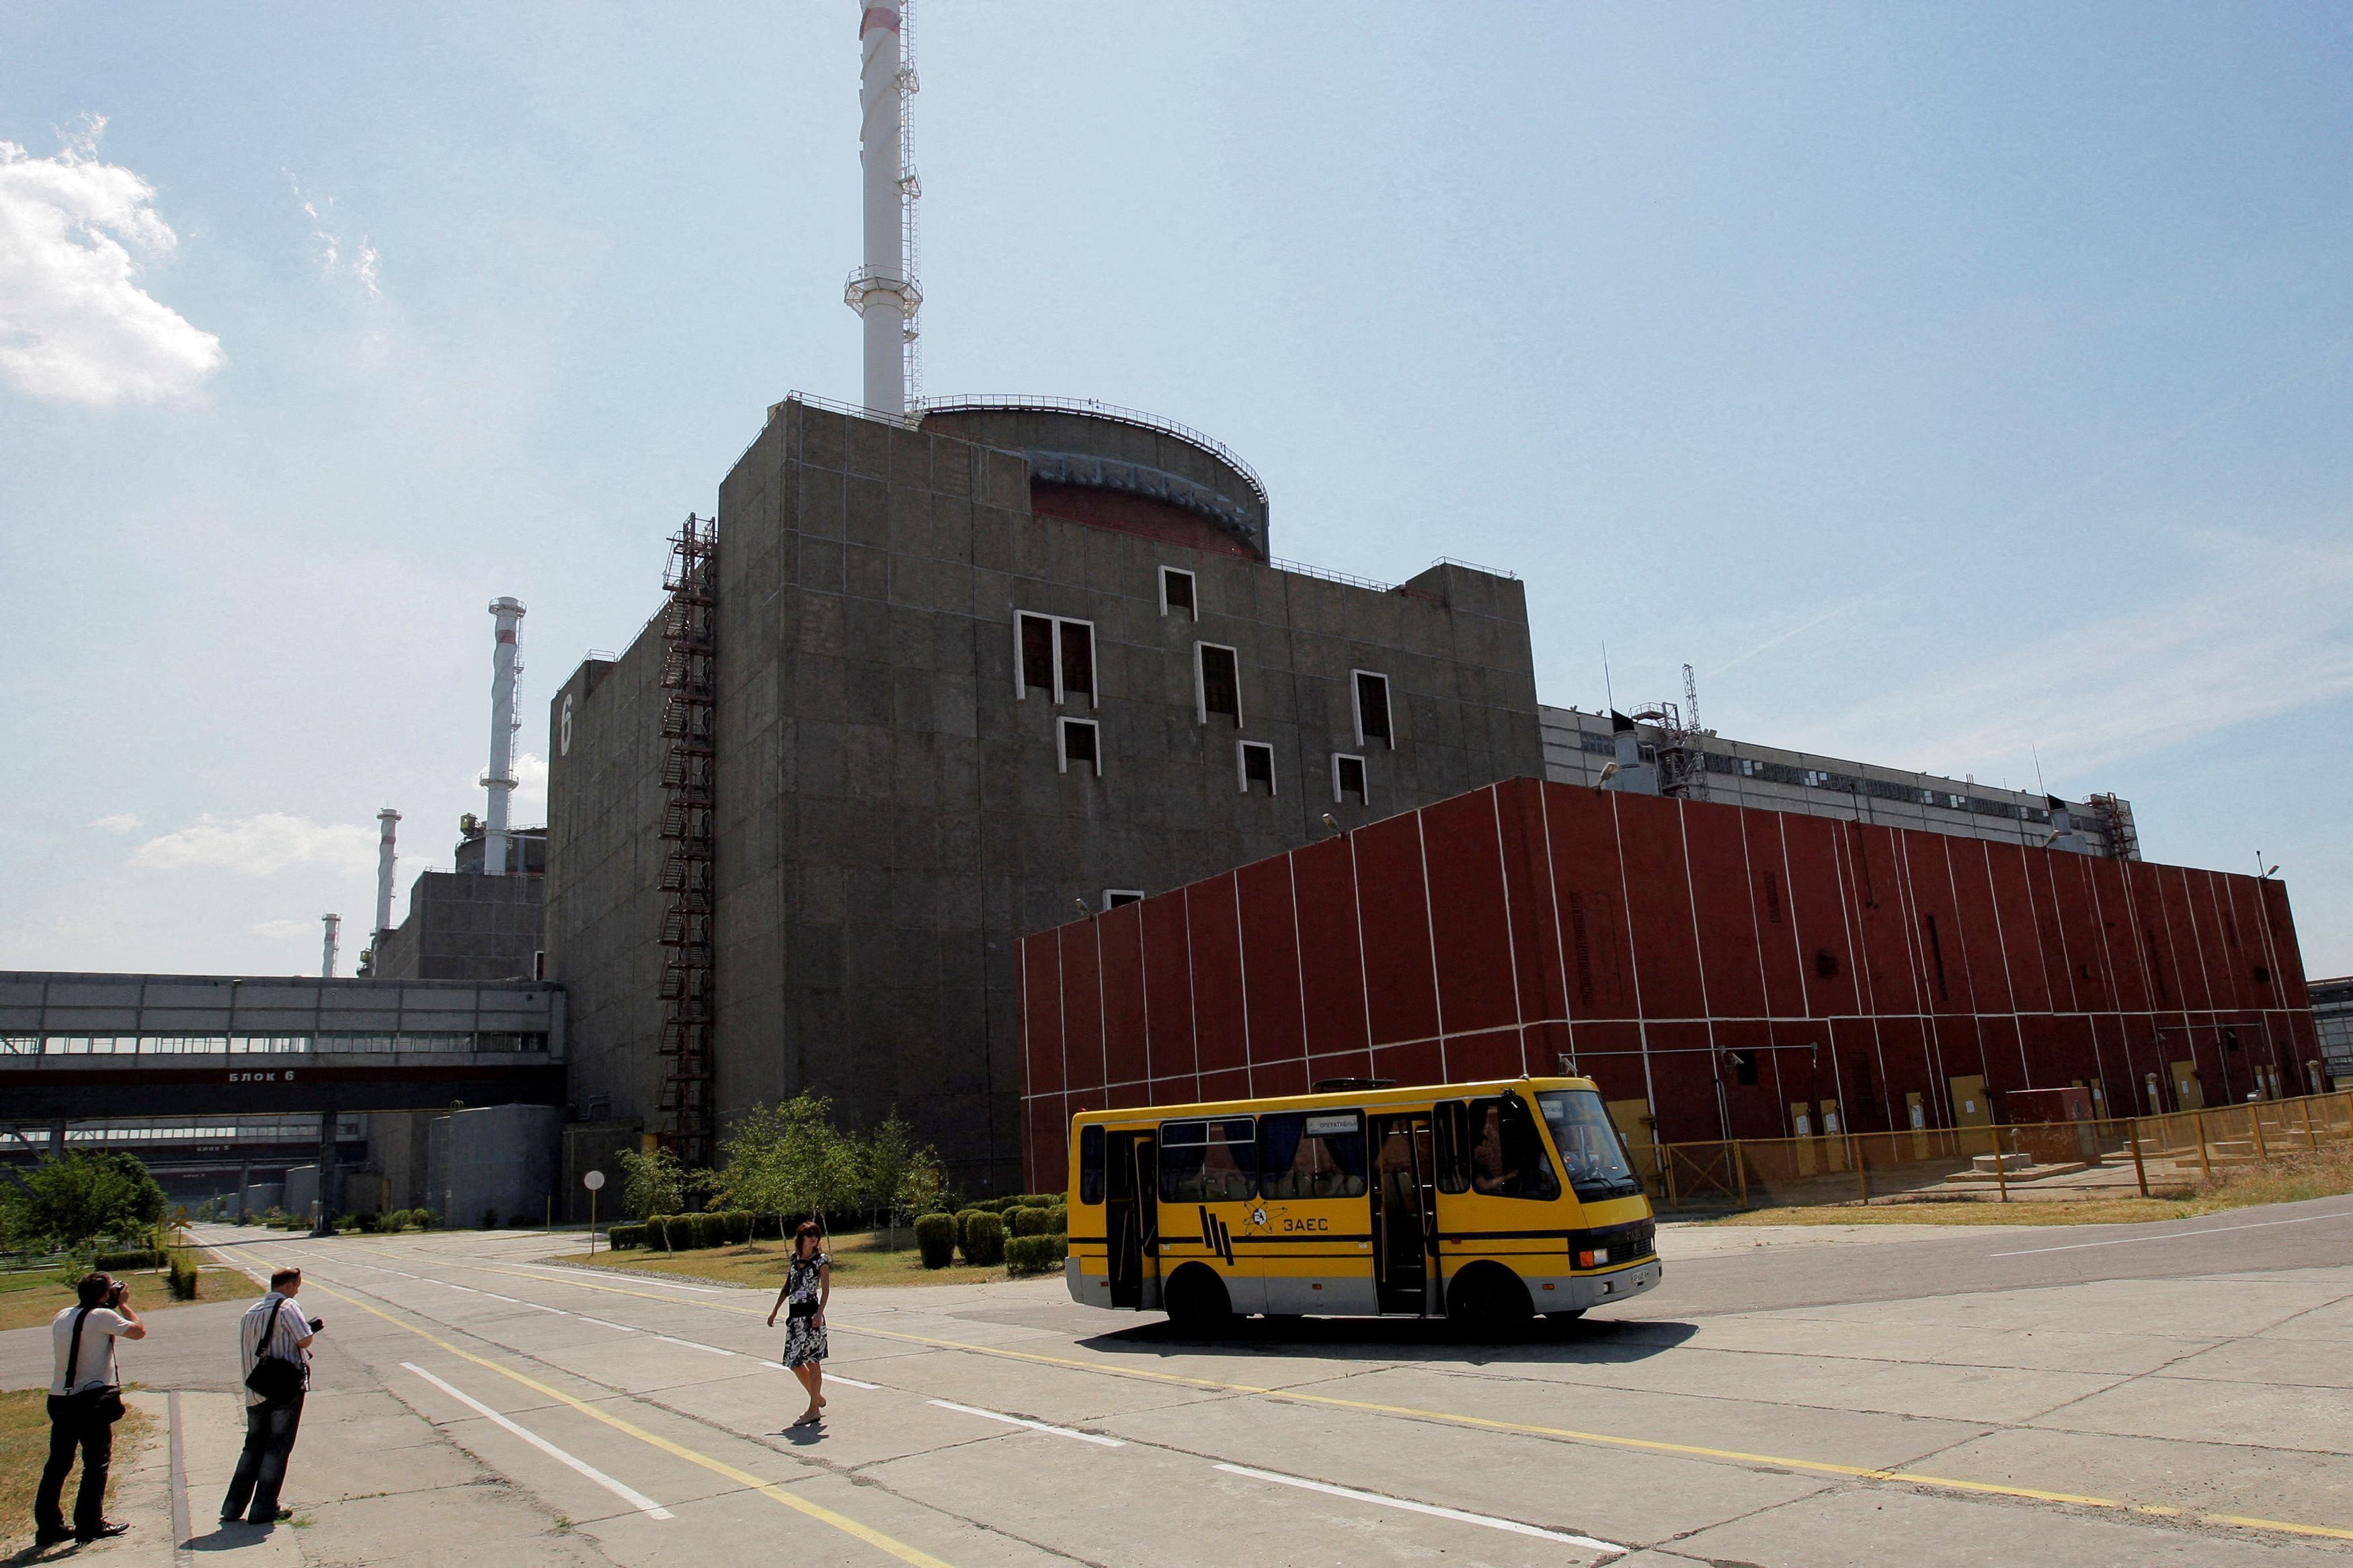 File photo of the Zaporizhzhia nuclear power station in Ukraine